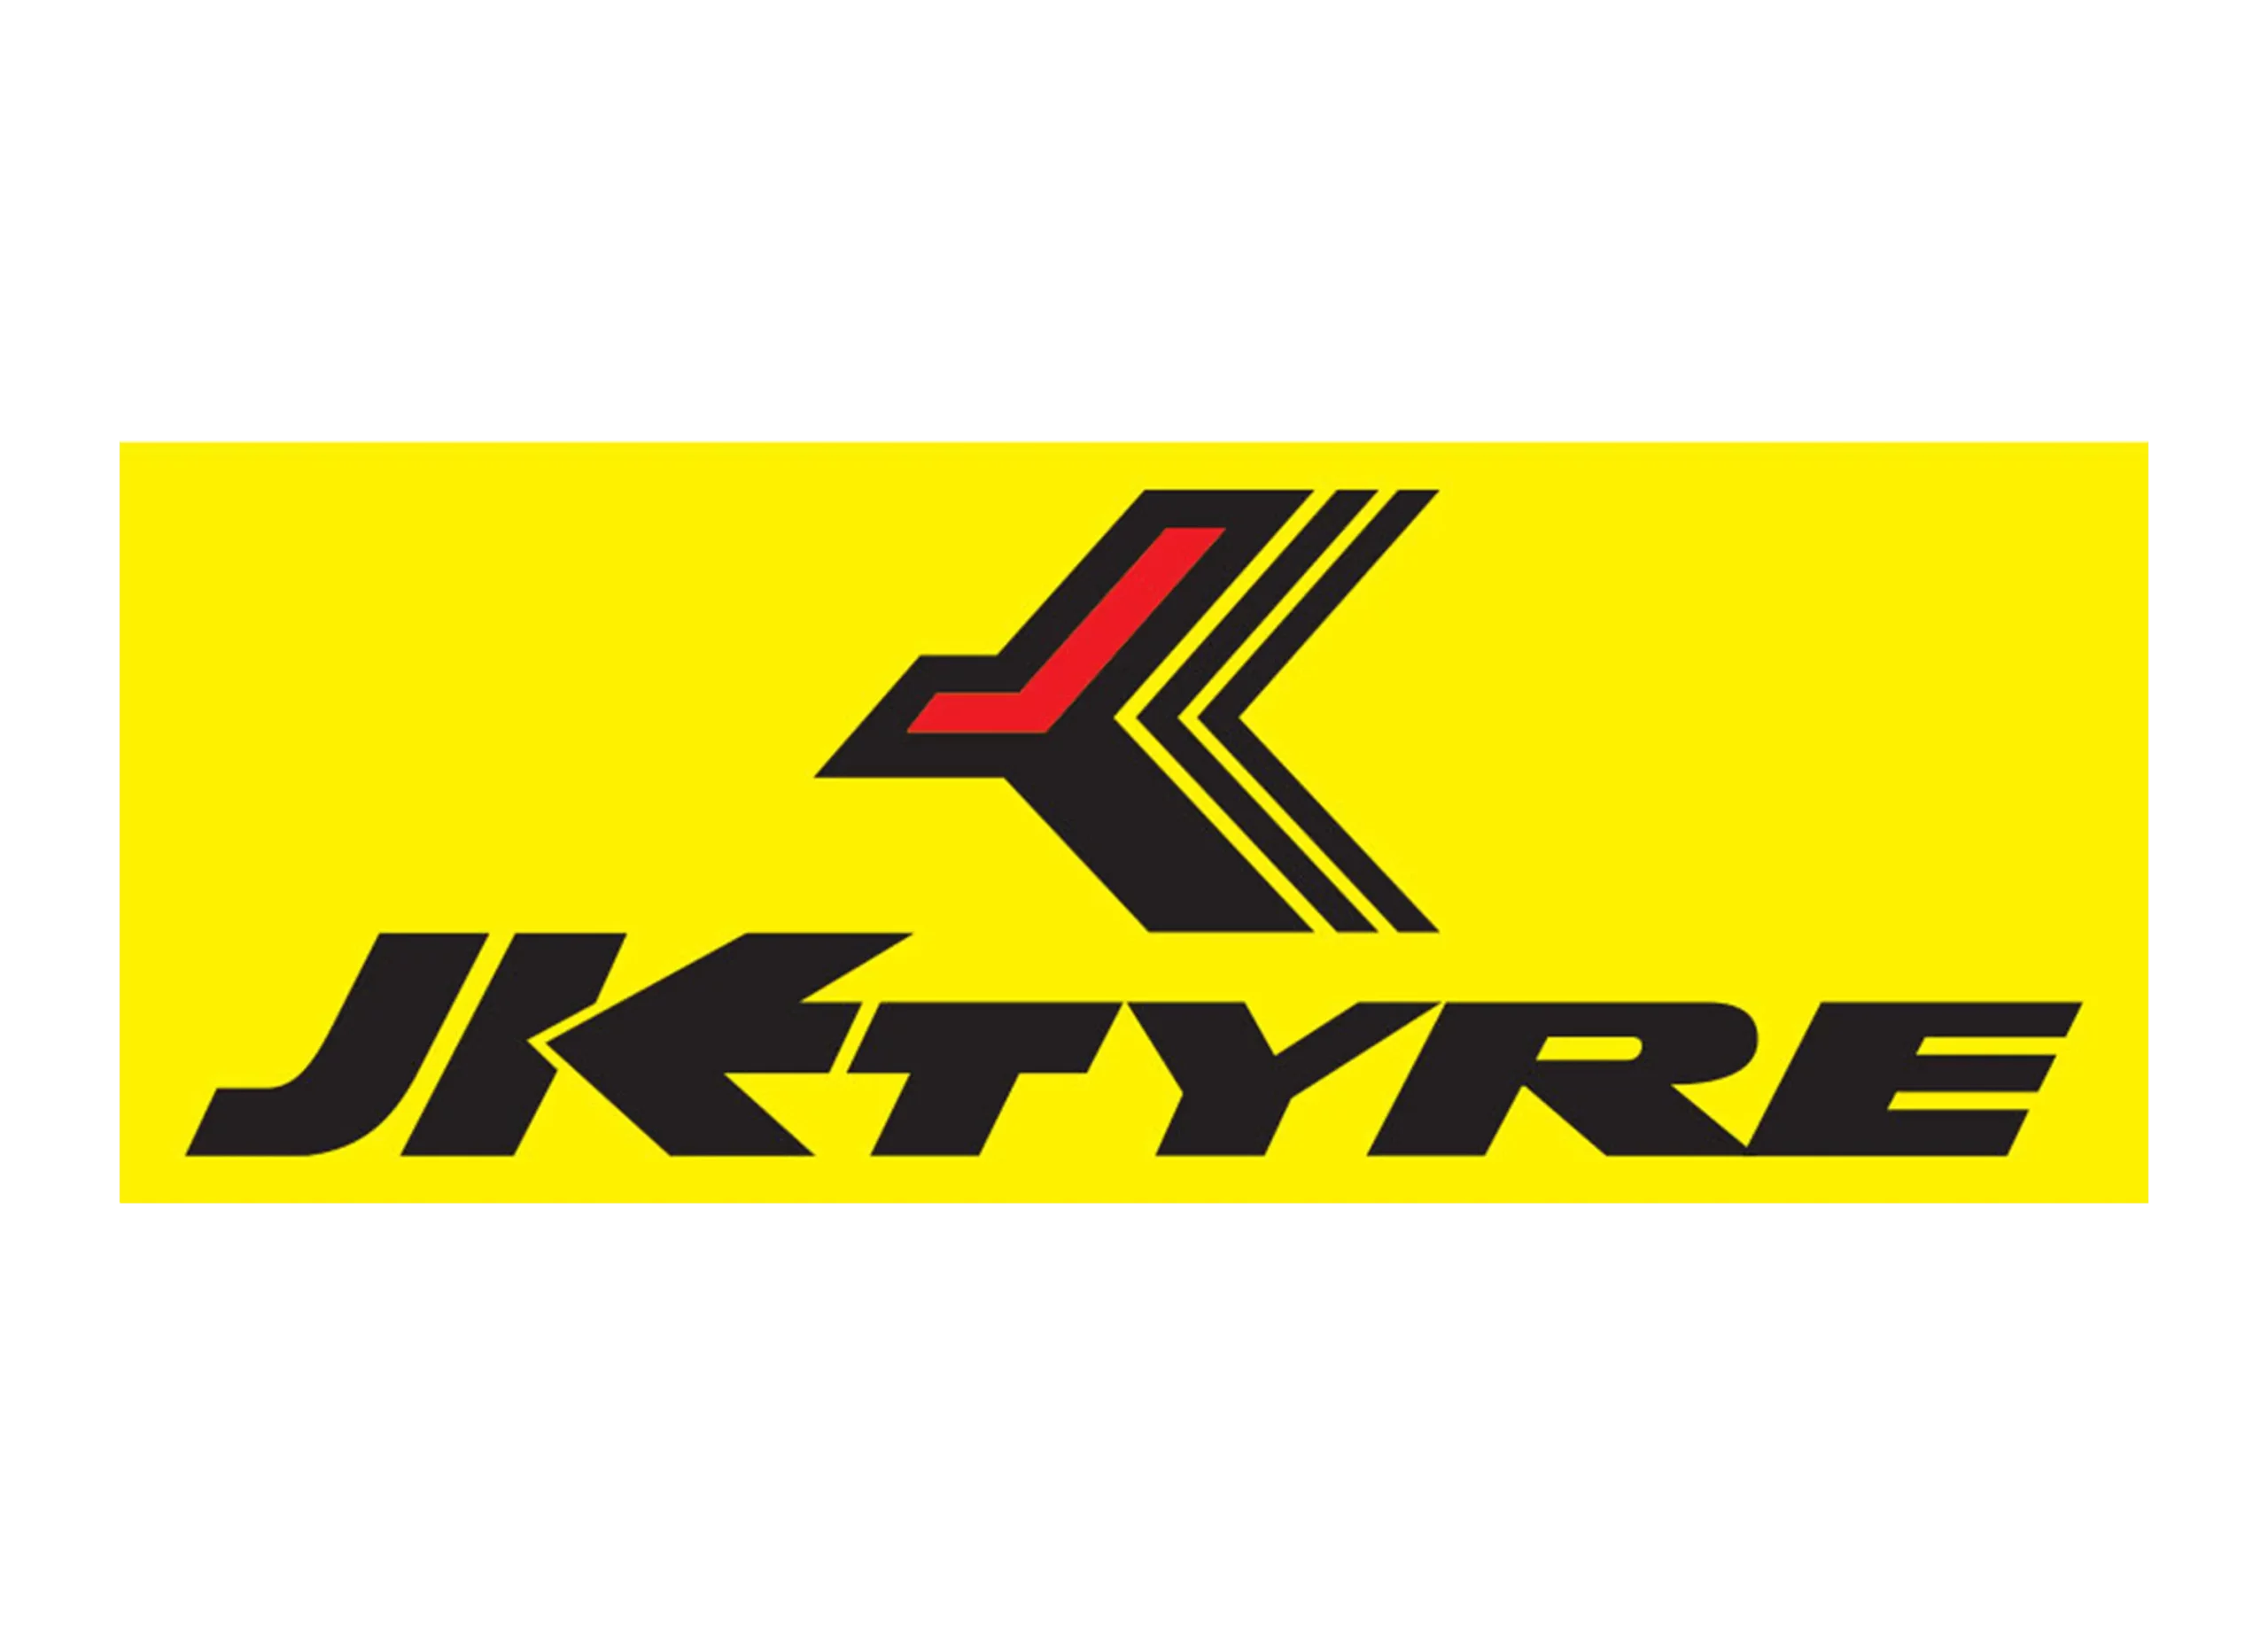 JK Tyre logo present